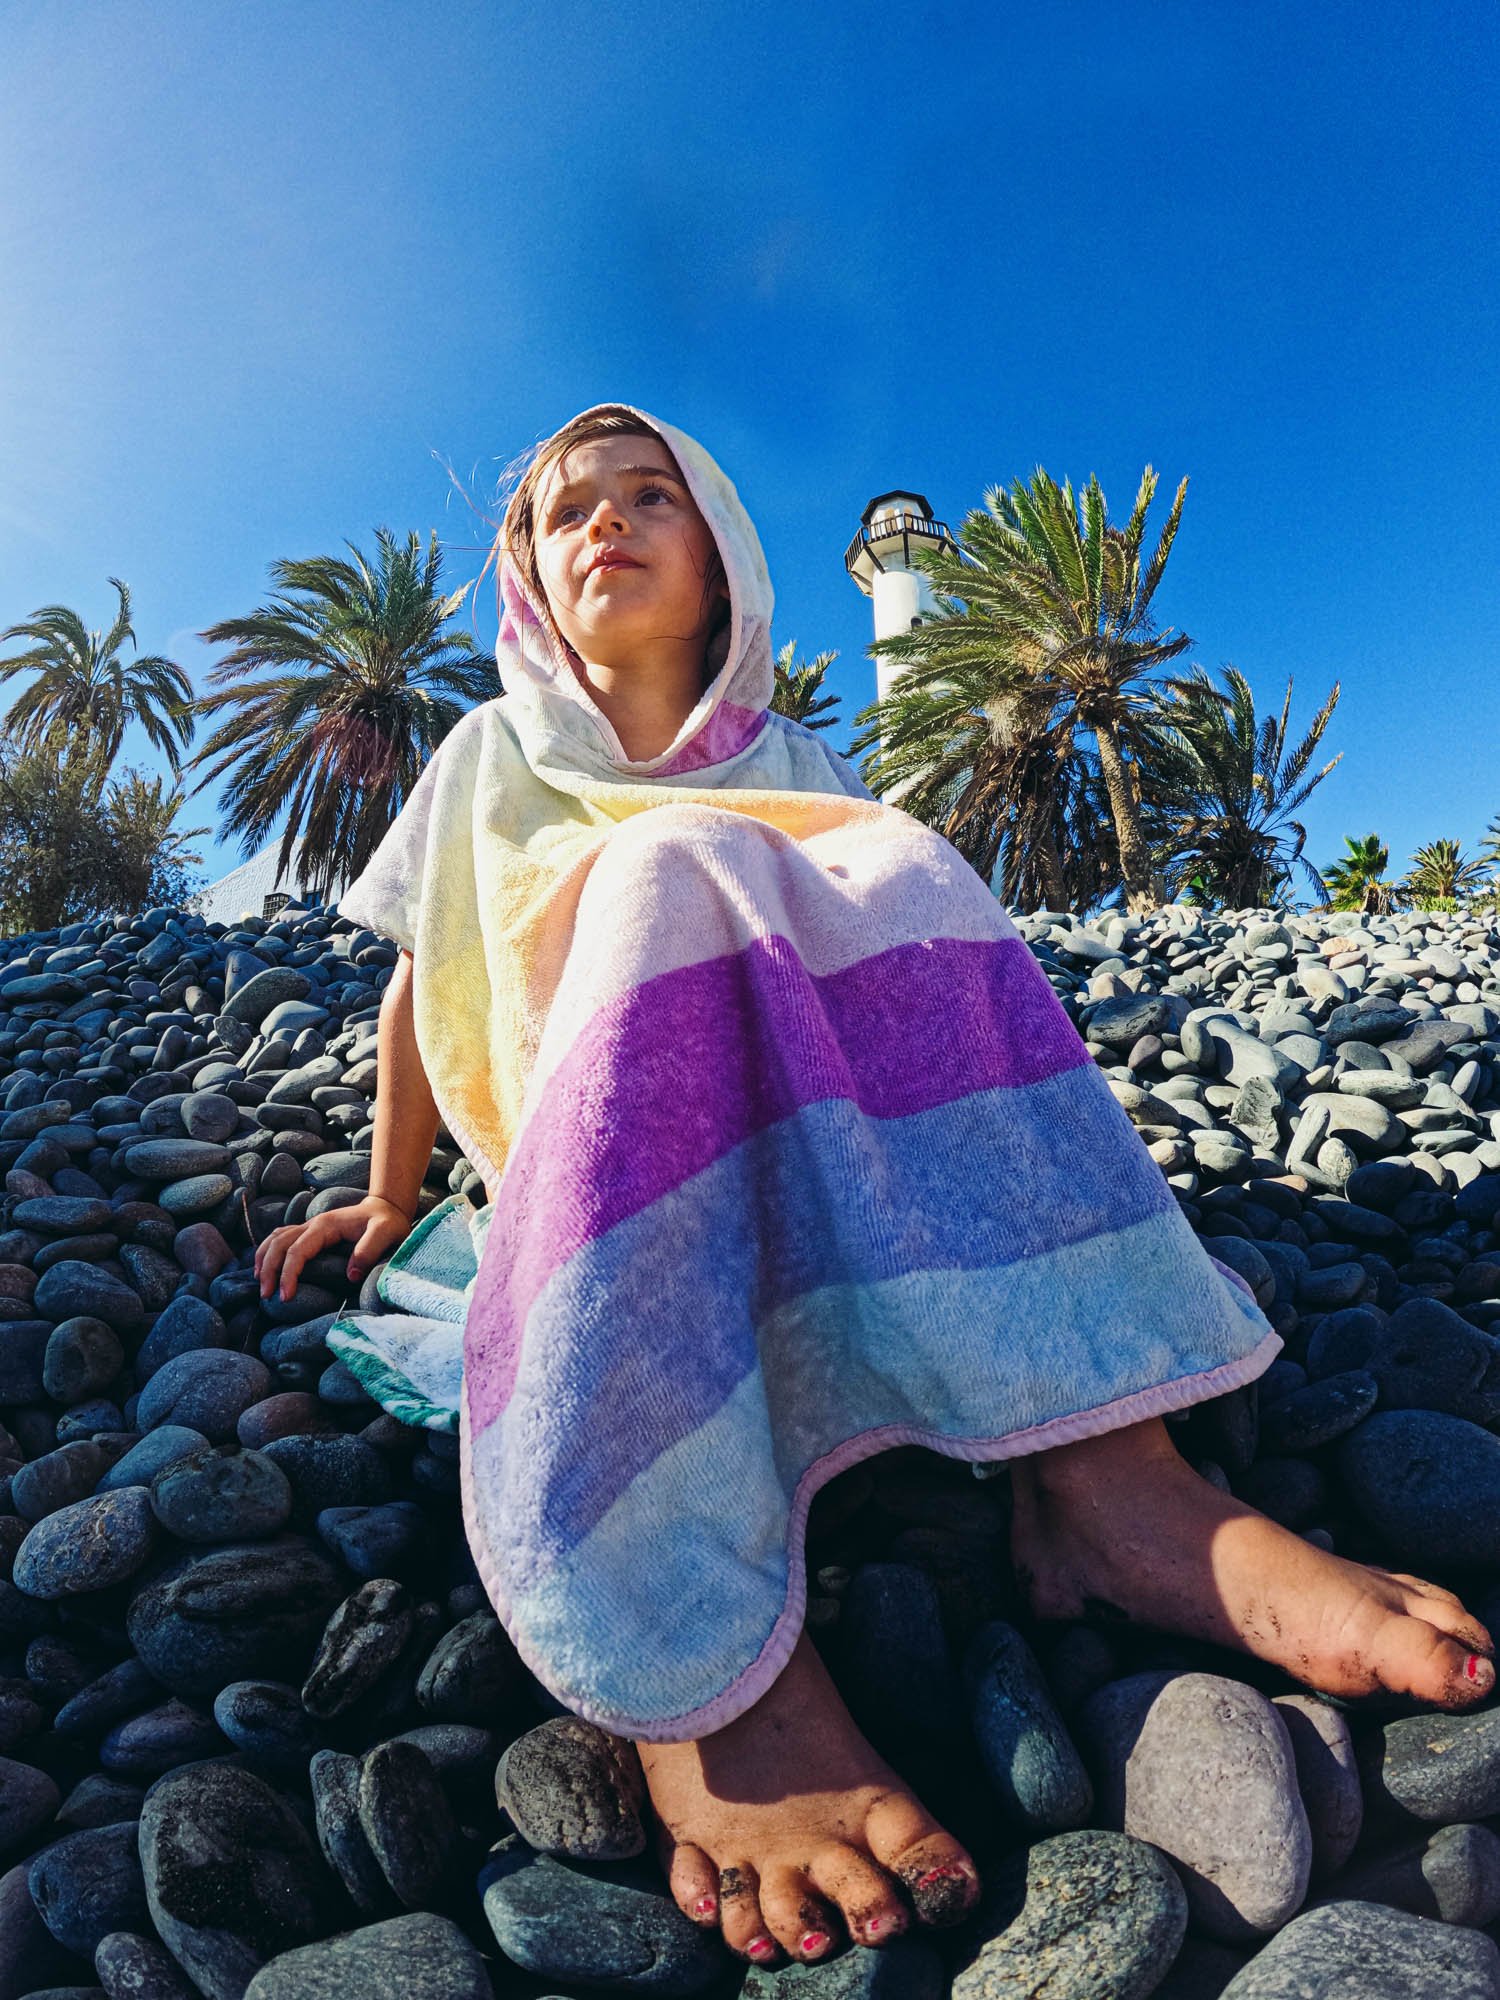 gopro-portrait-girl-pebbles-towel-beach-palmtrees-documentary-family-photos-holiday.jpg